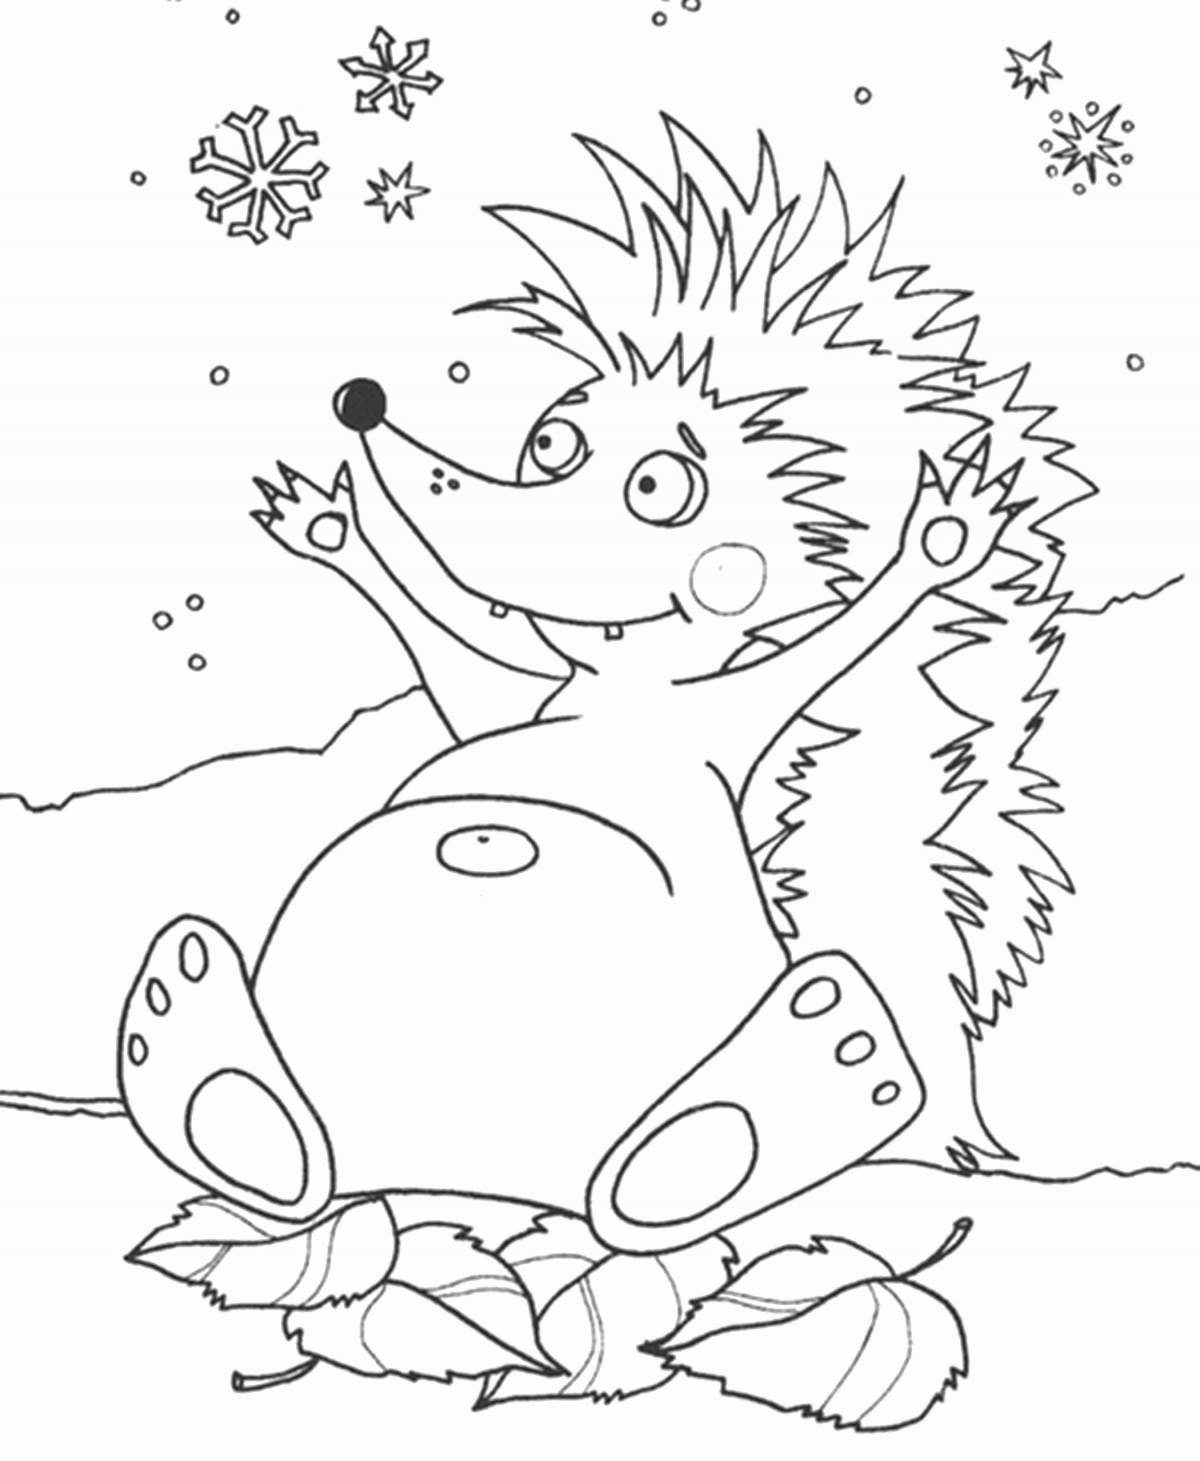 Coloring book playful hedgehog